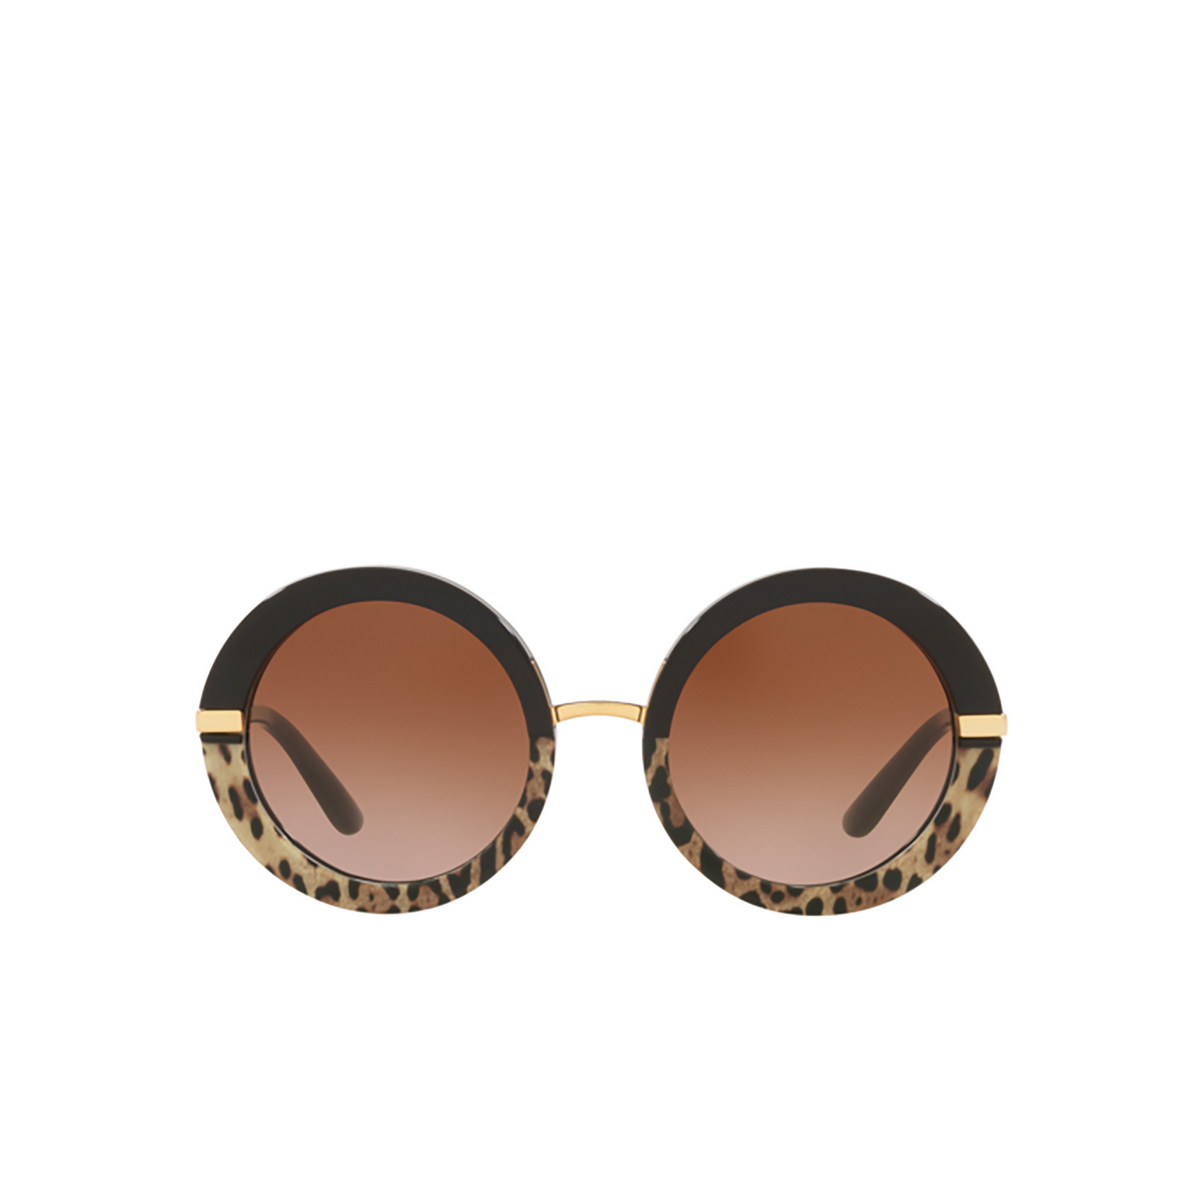 Dolce & Gabbana DG4393 Sunglasses 324413 Black/leo print - front view